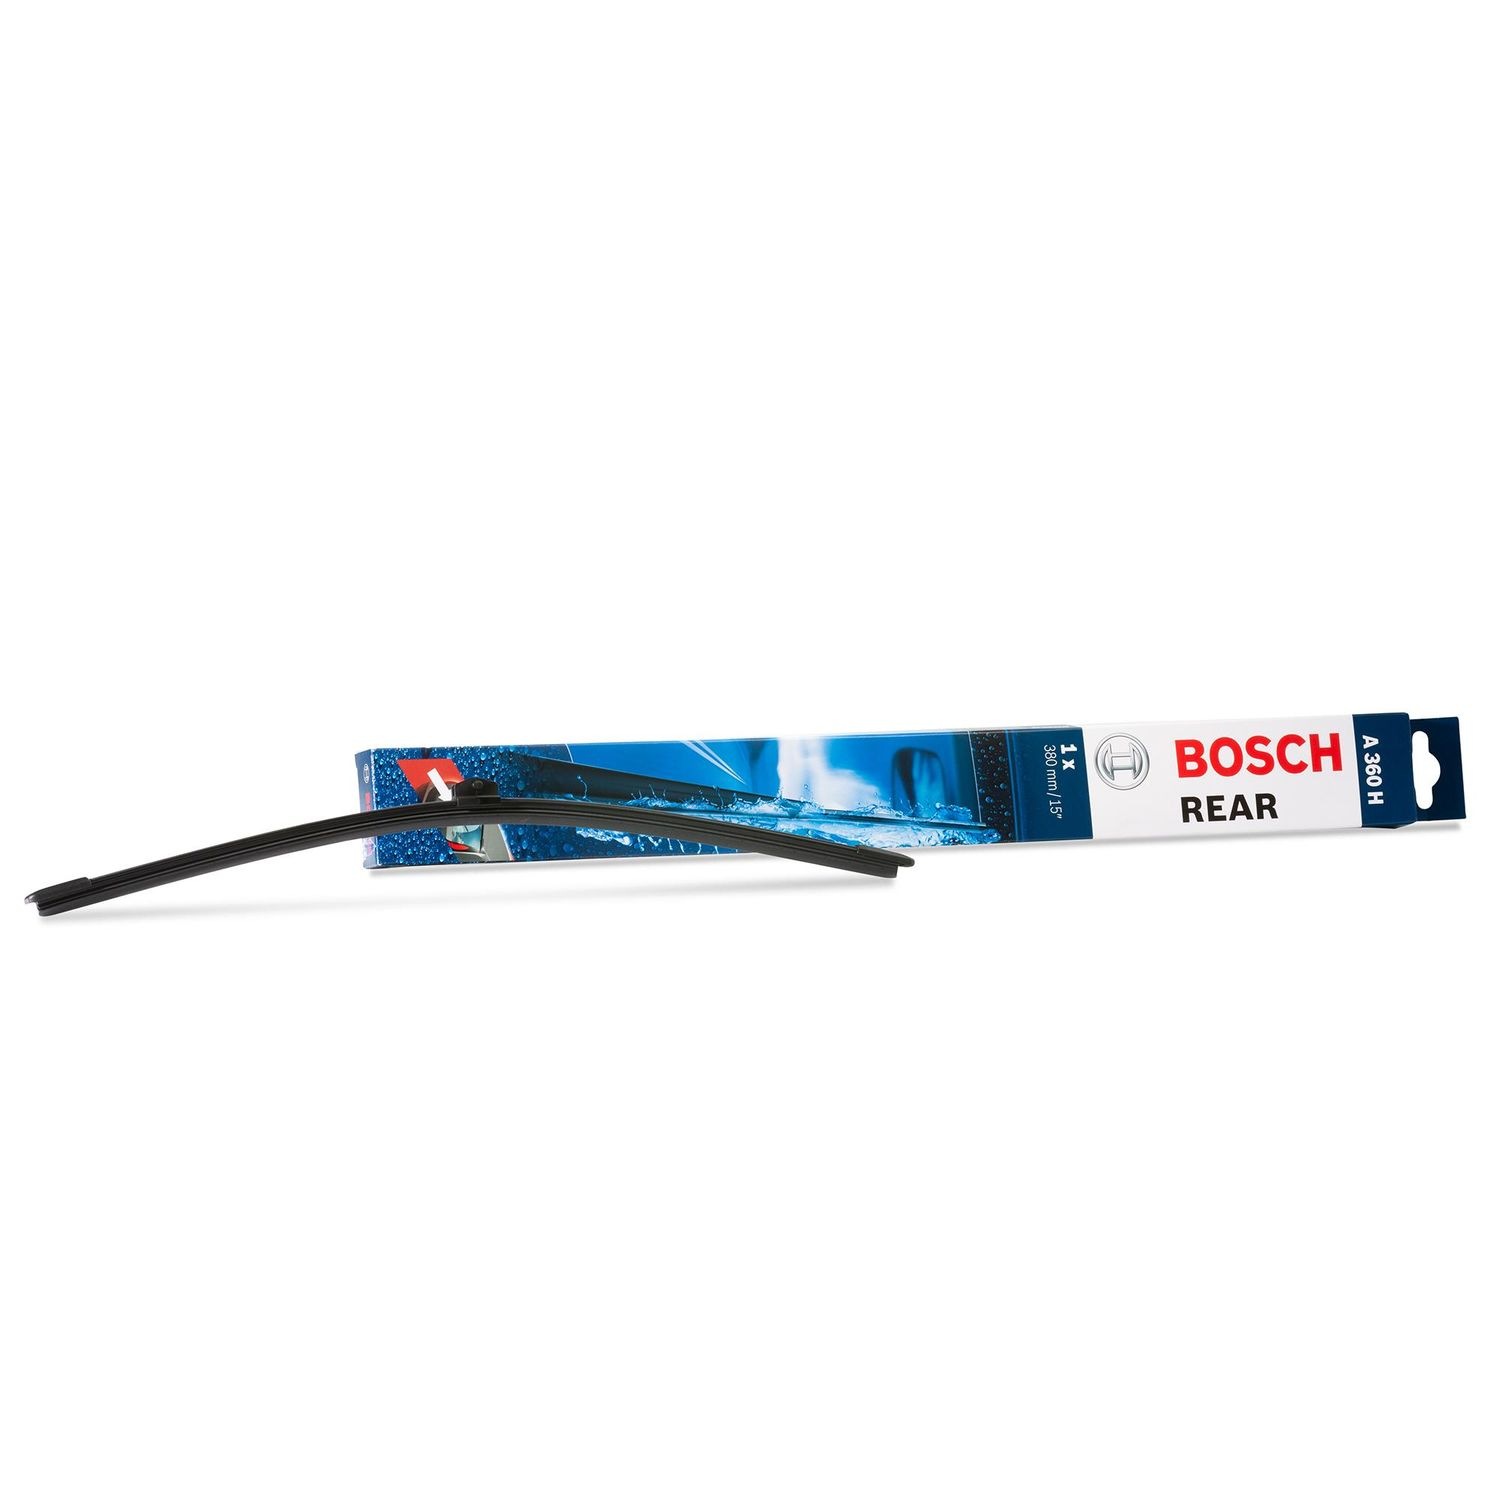 Escobilla limpiaparabrisas Bosch Rear H314, Longitud: 300mm − 1